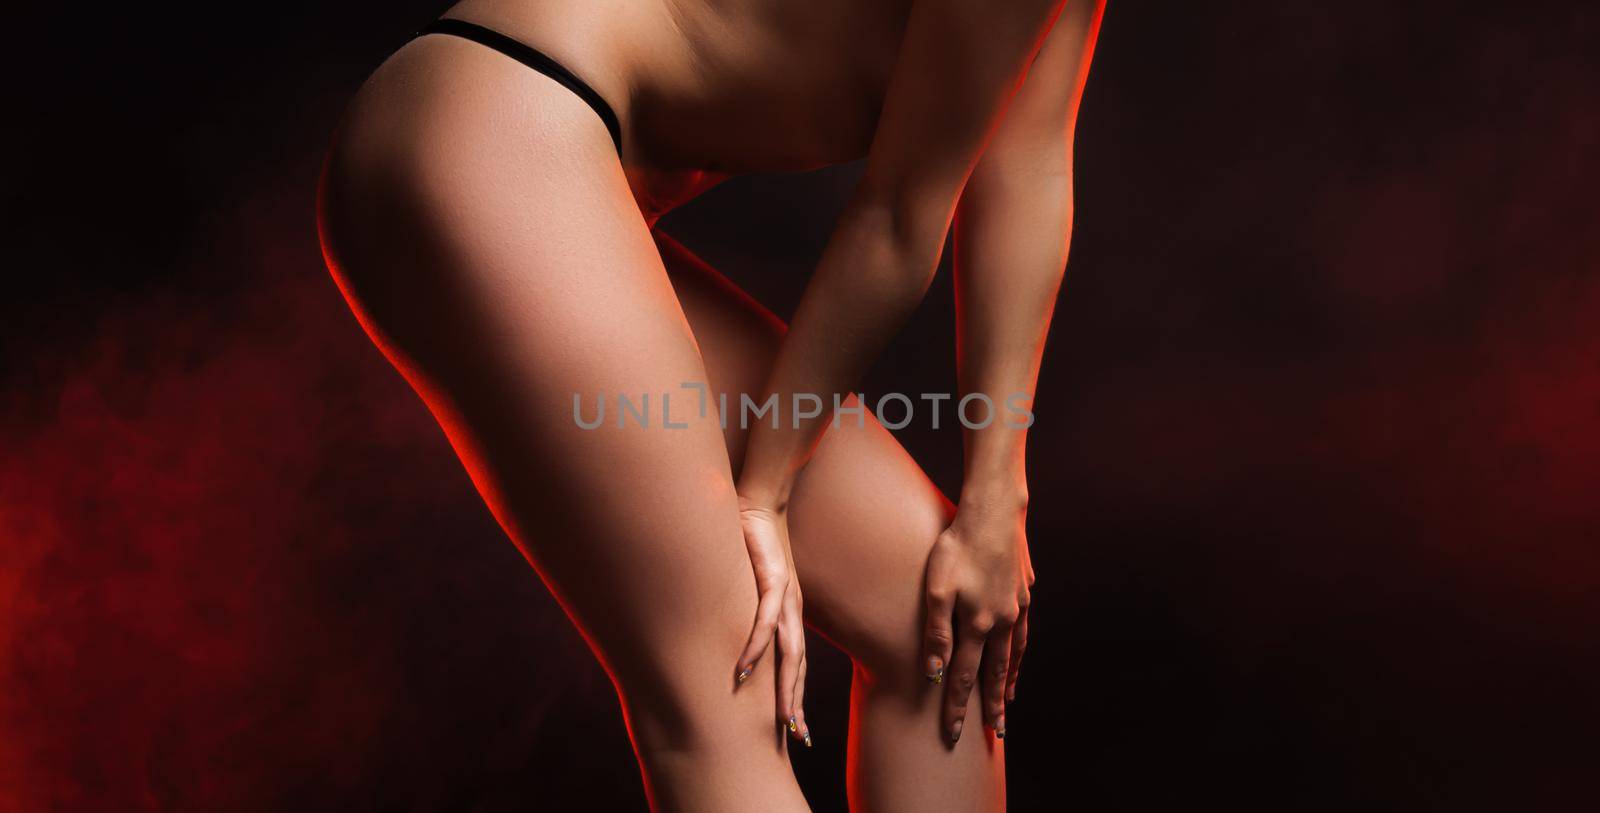 semi-nude woman in lace black panties by palinchak